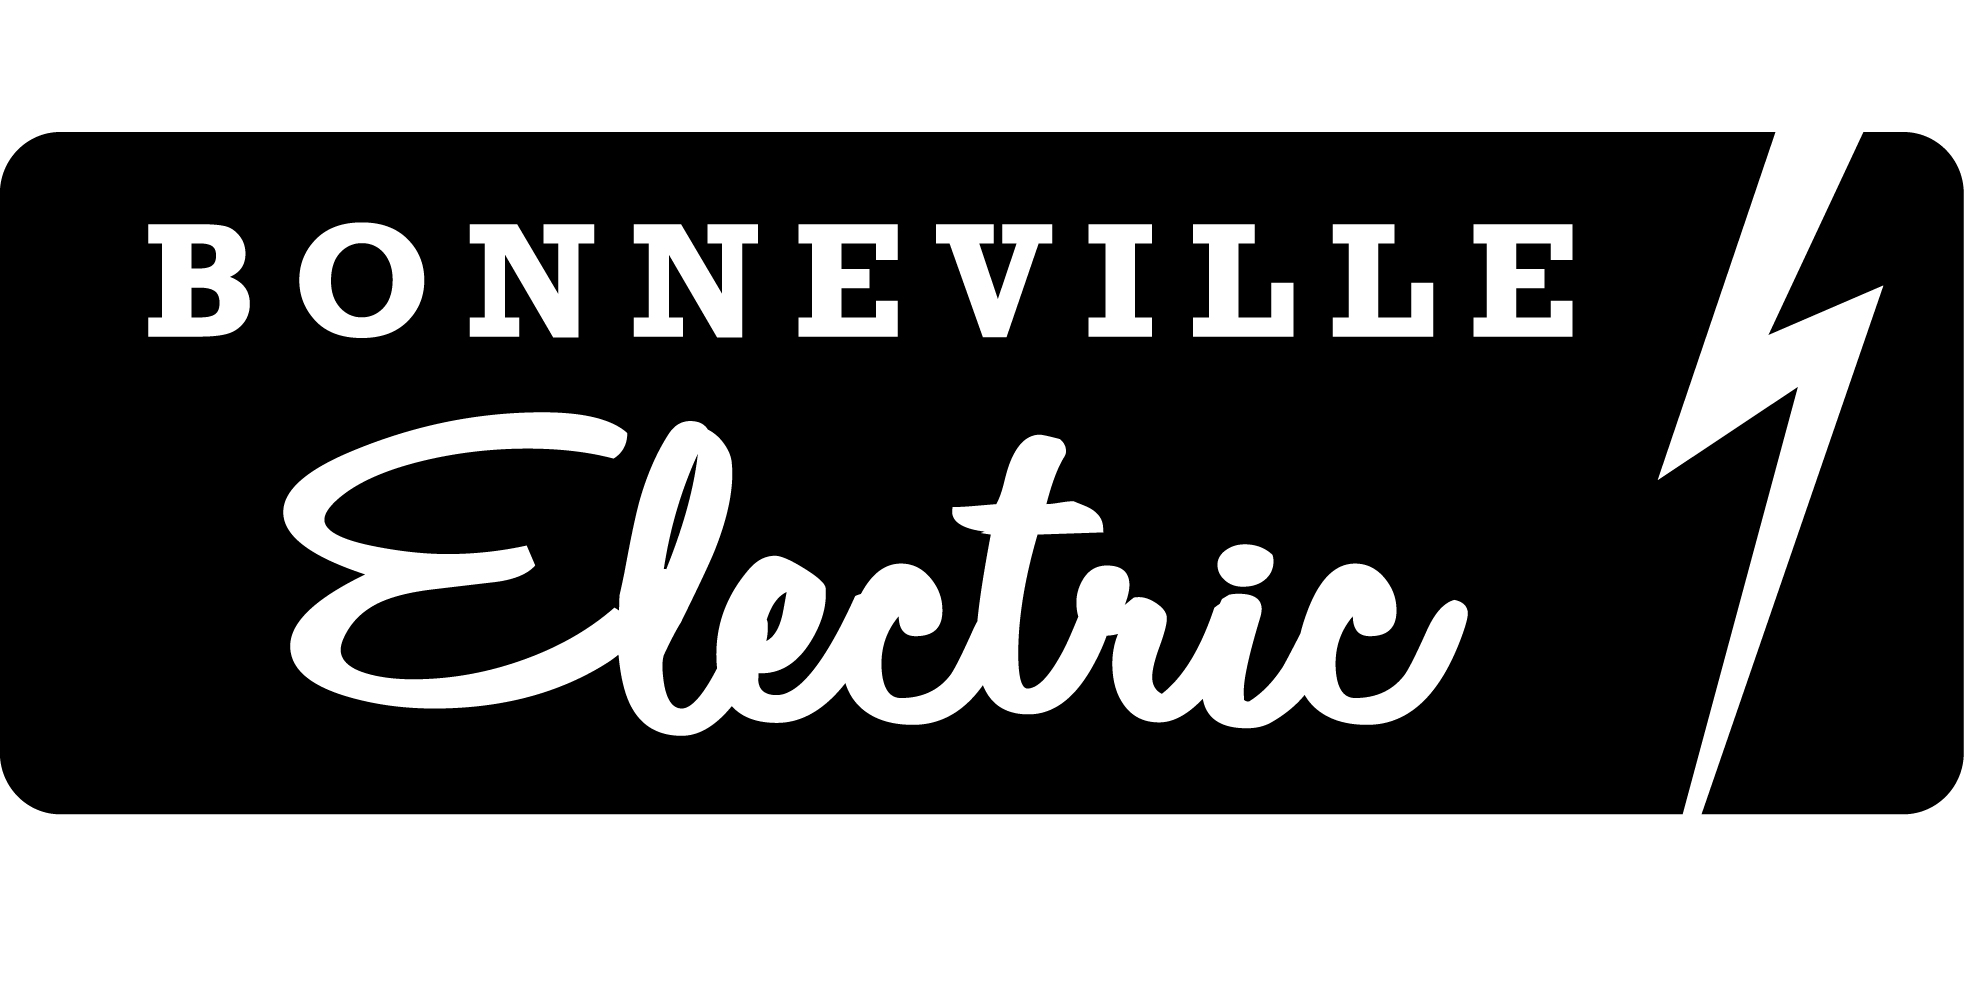 Bonneville Electric 210 B Maple Ave, Carrboro North Carolina 27510